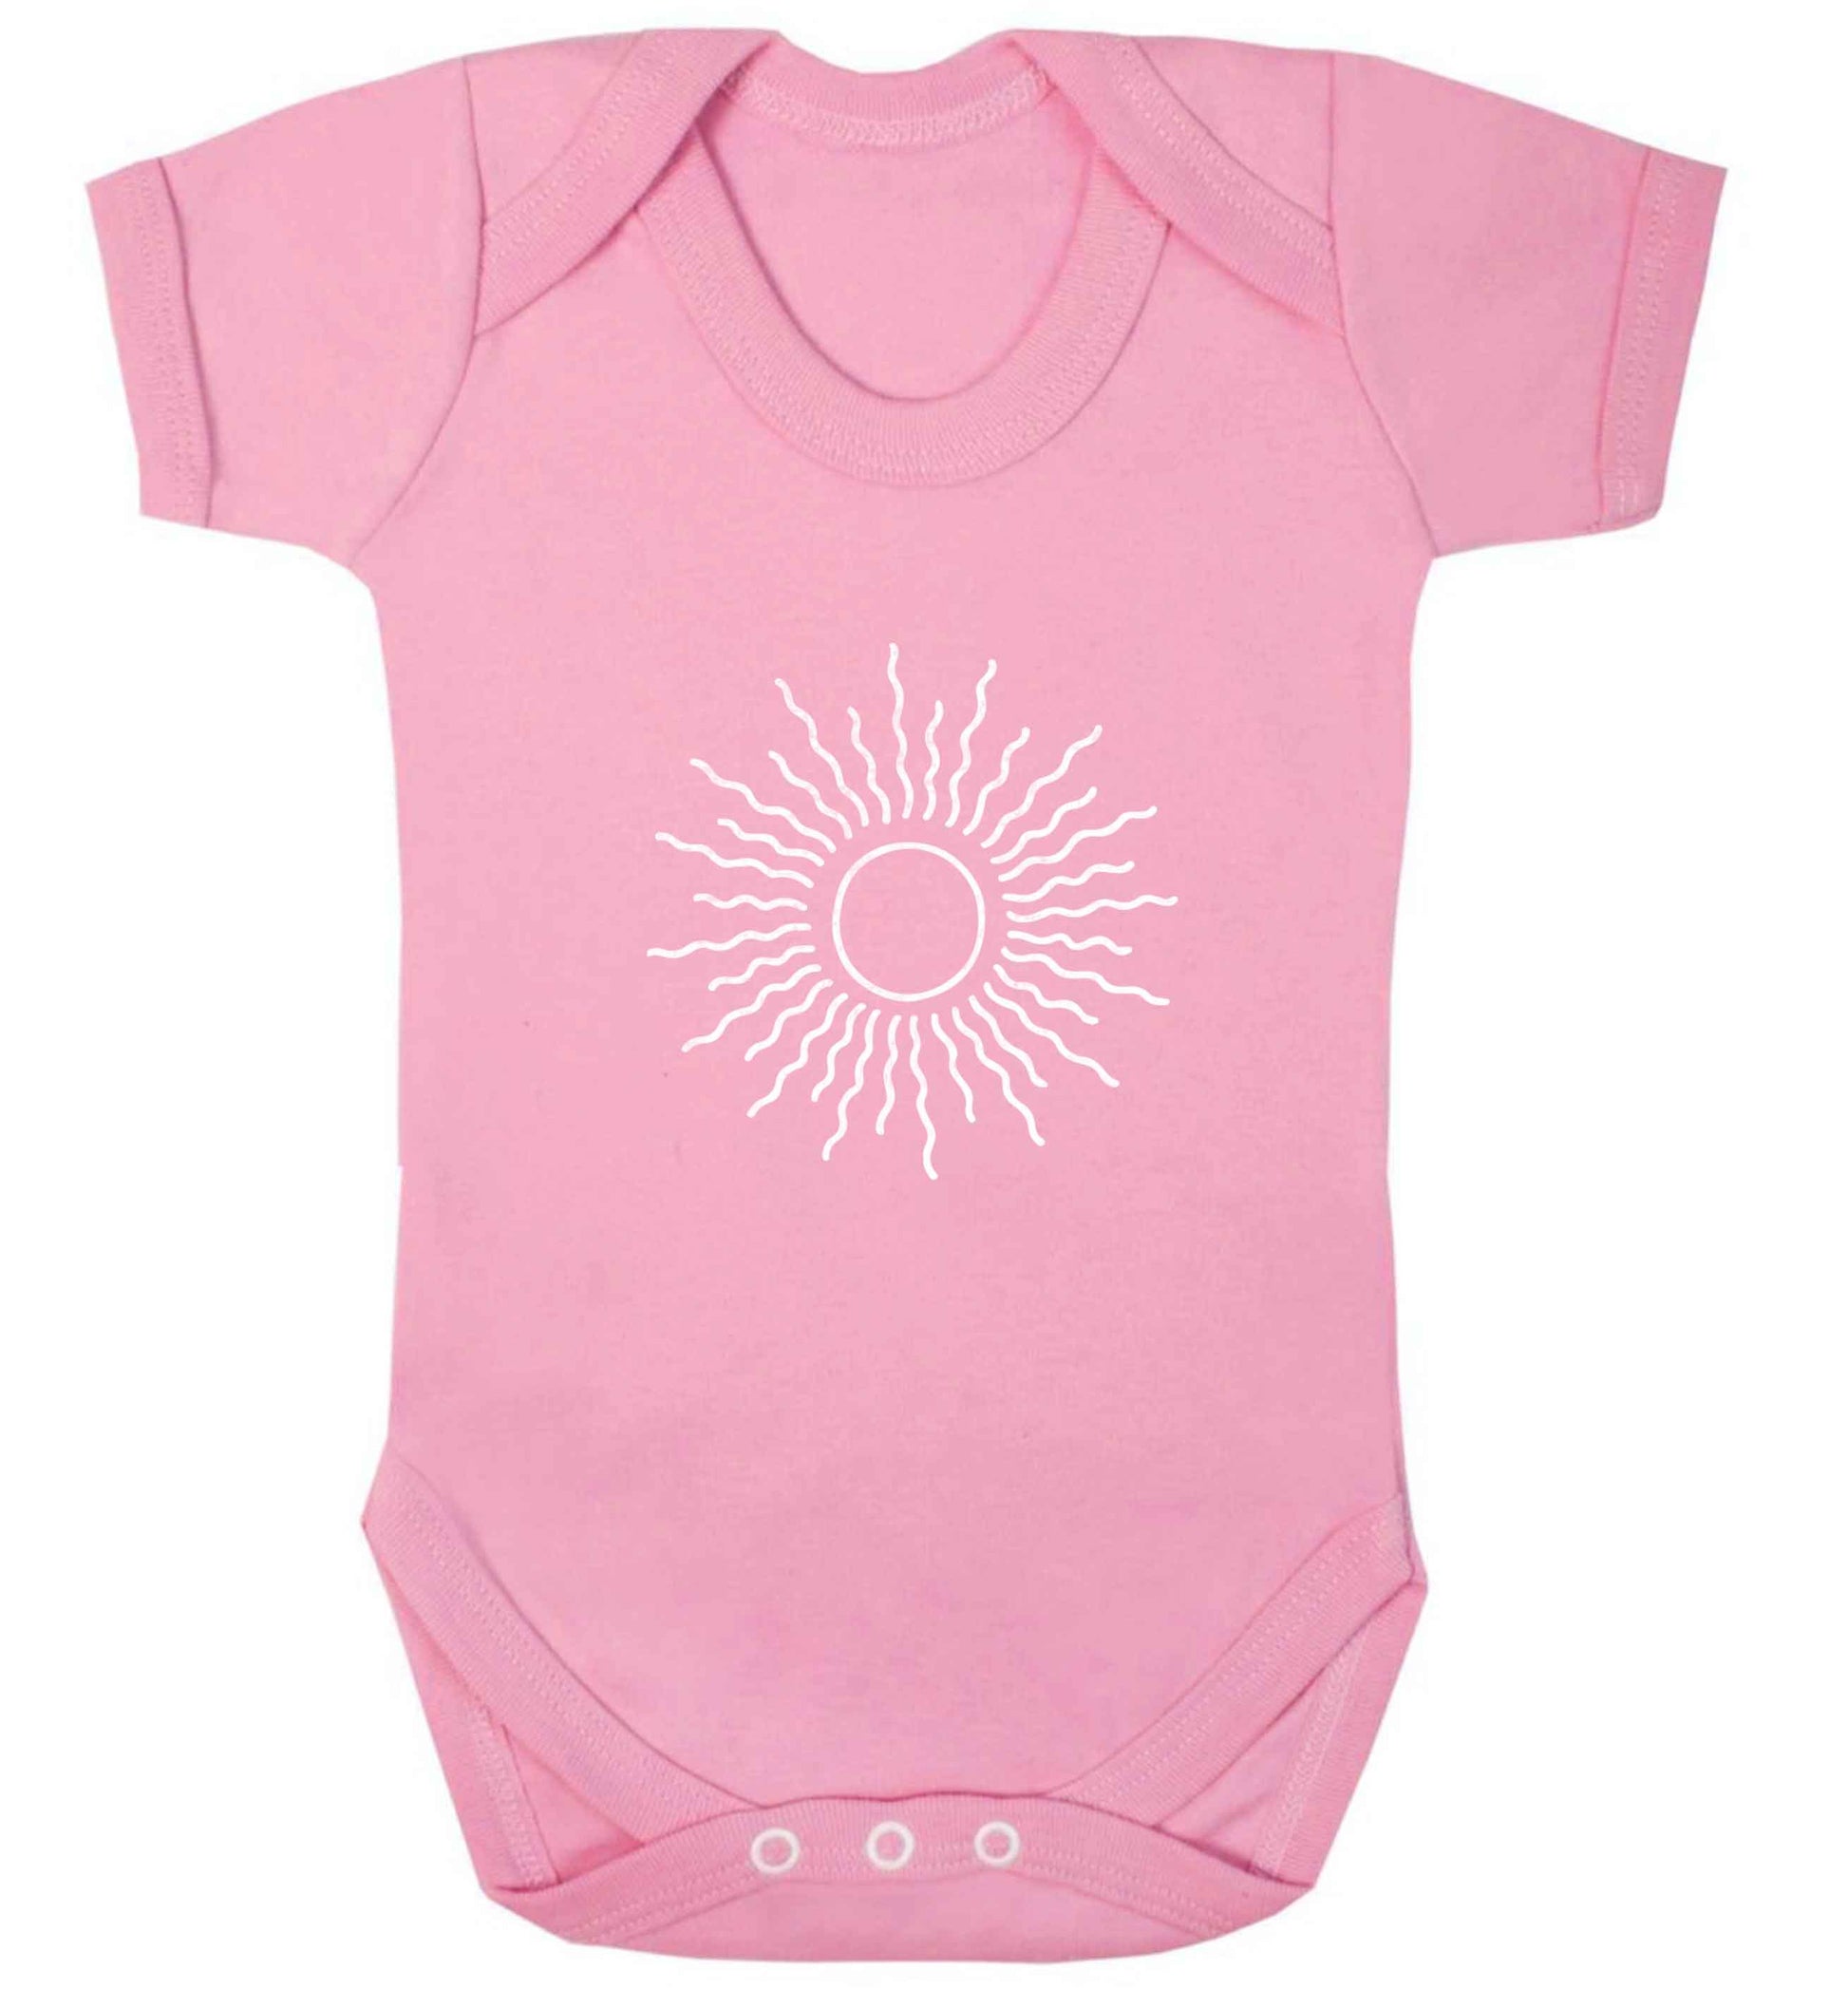 Sun illustration baby vest pale pink 18-24 months